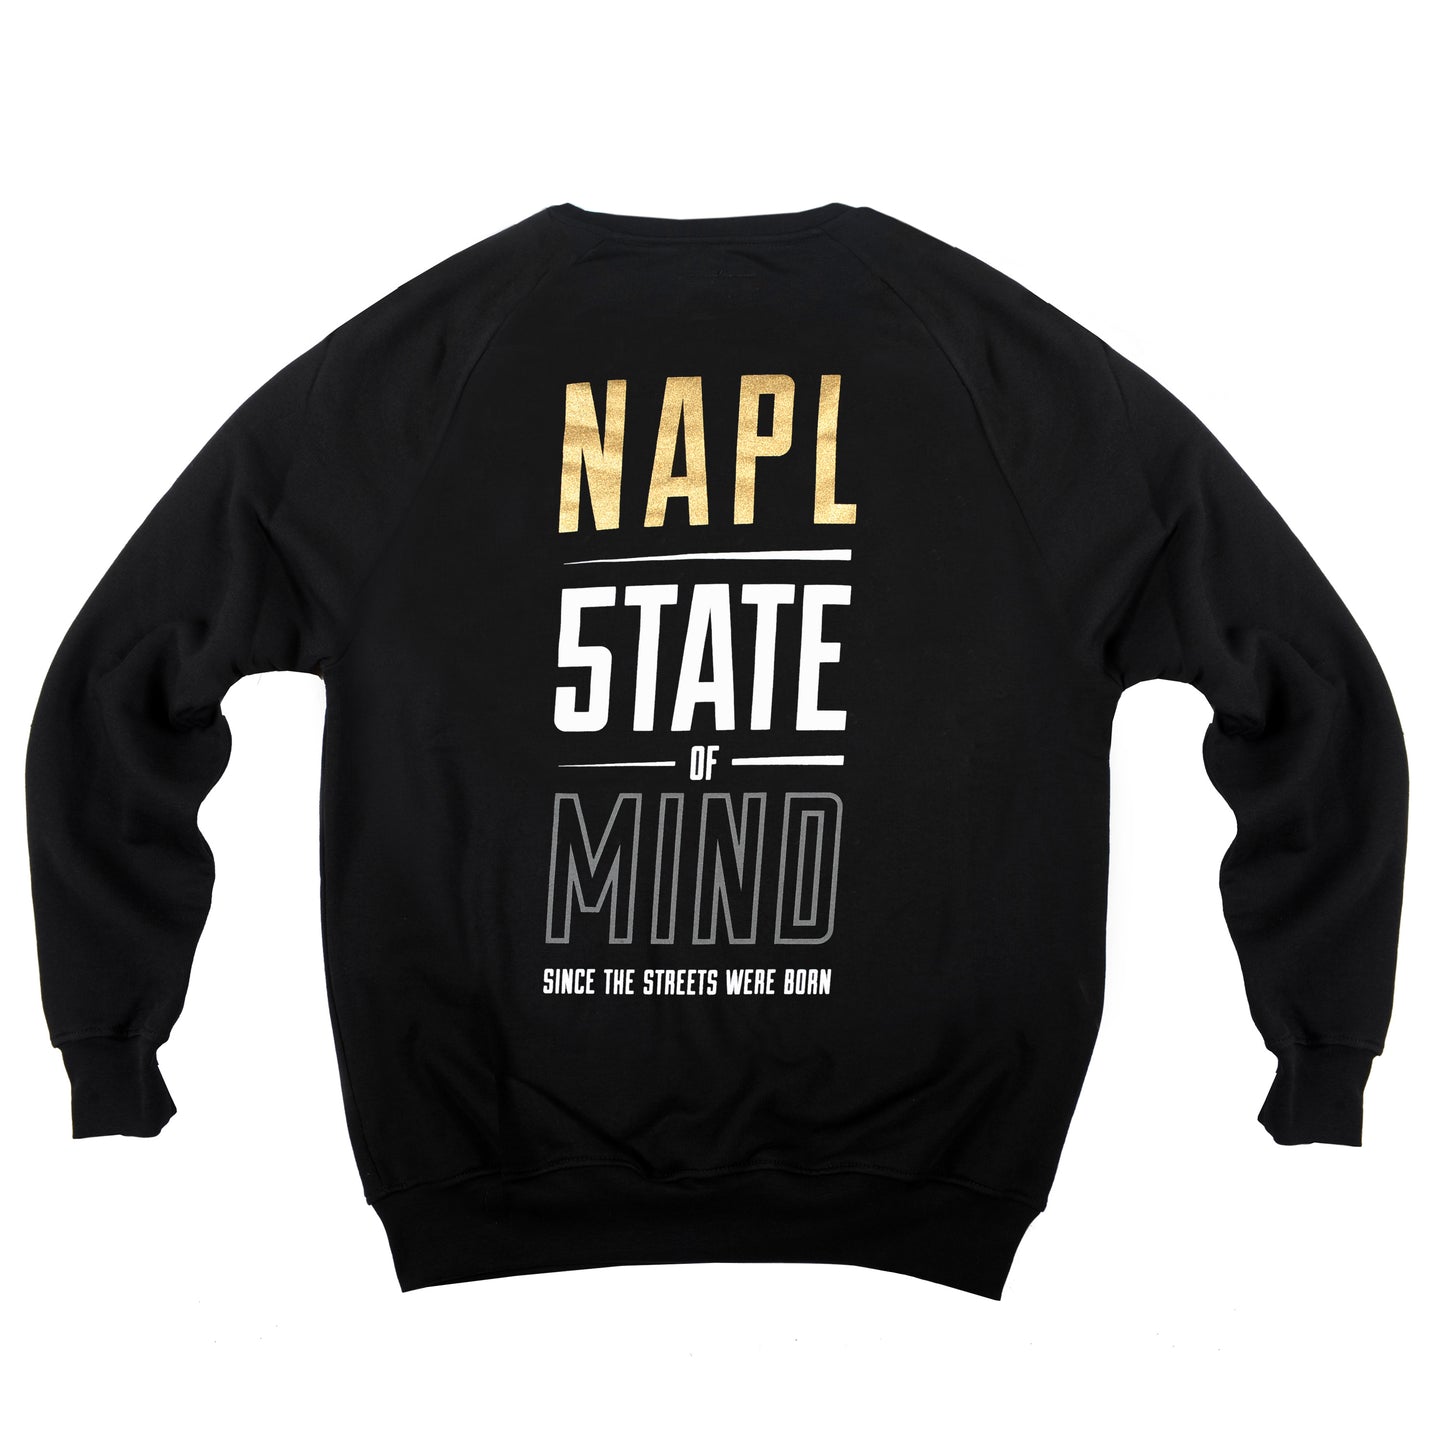 "NAPL CELEBRATION" gold & reflective black sweatshirt